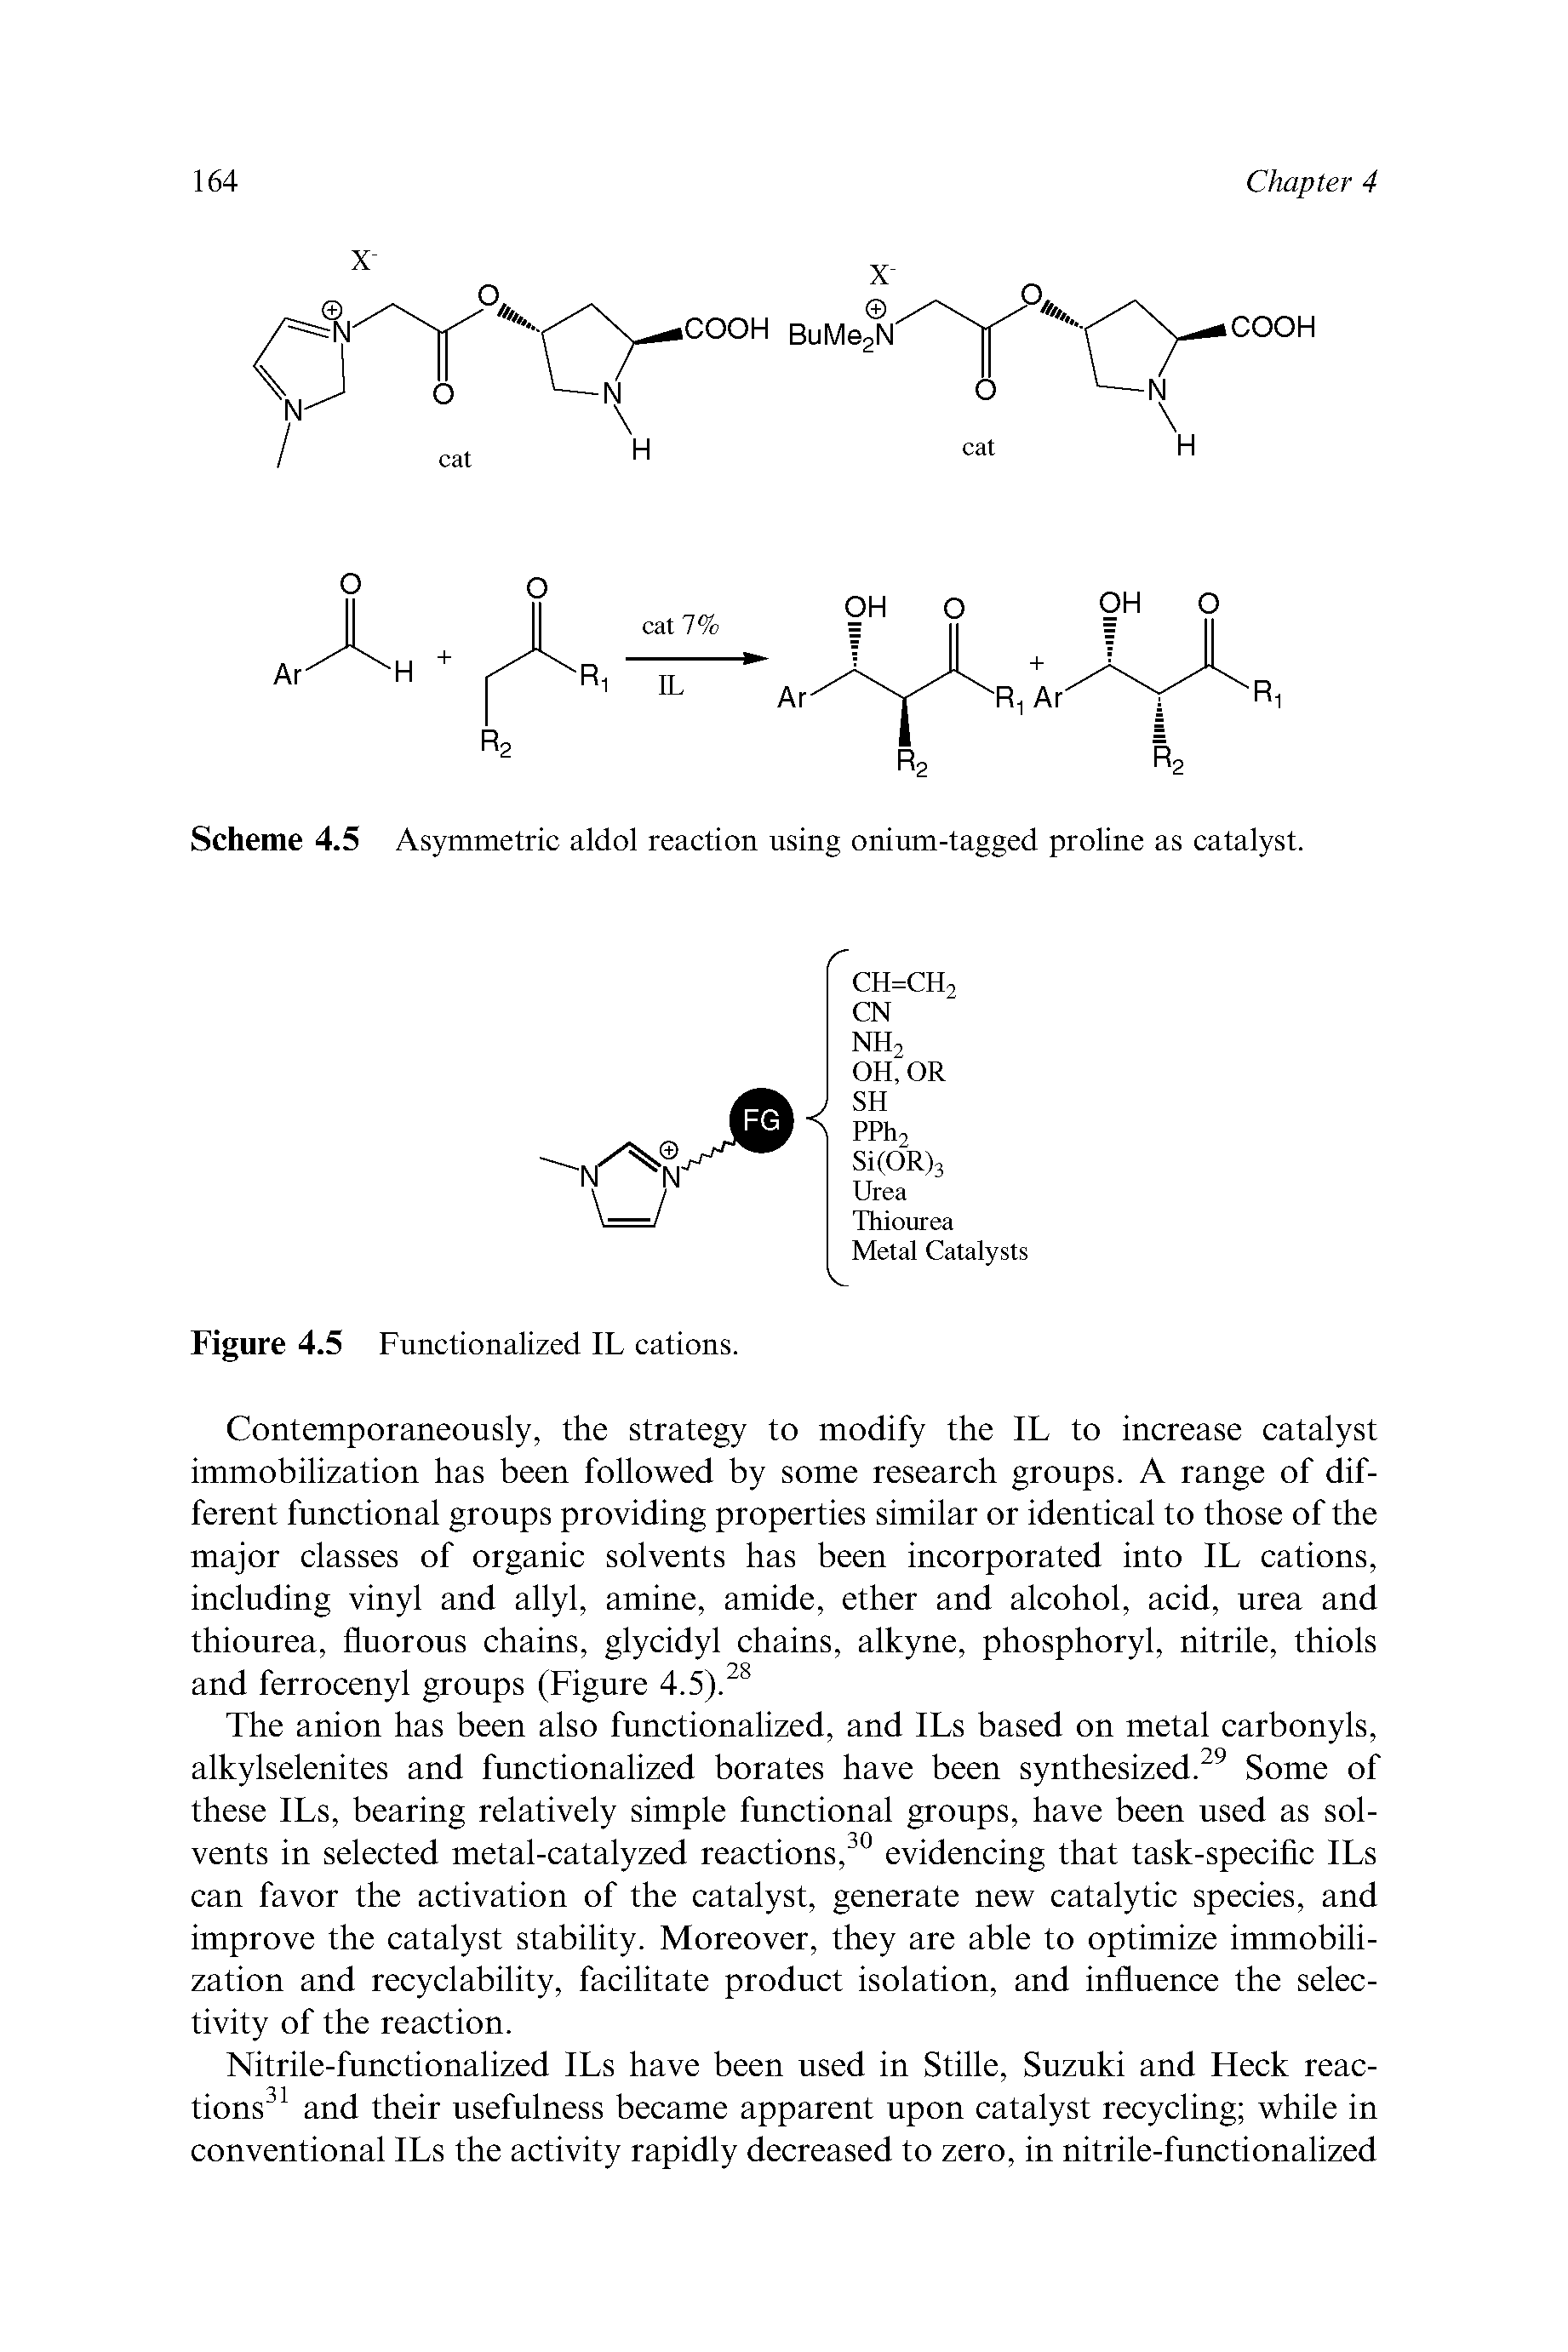 Scheme 4.5 Asymmetric aldol reaction using onium-tagged proline as catalyst.